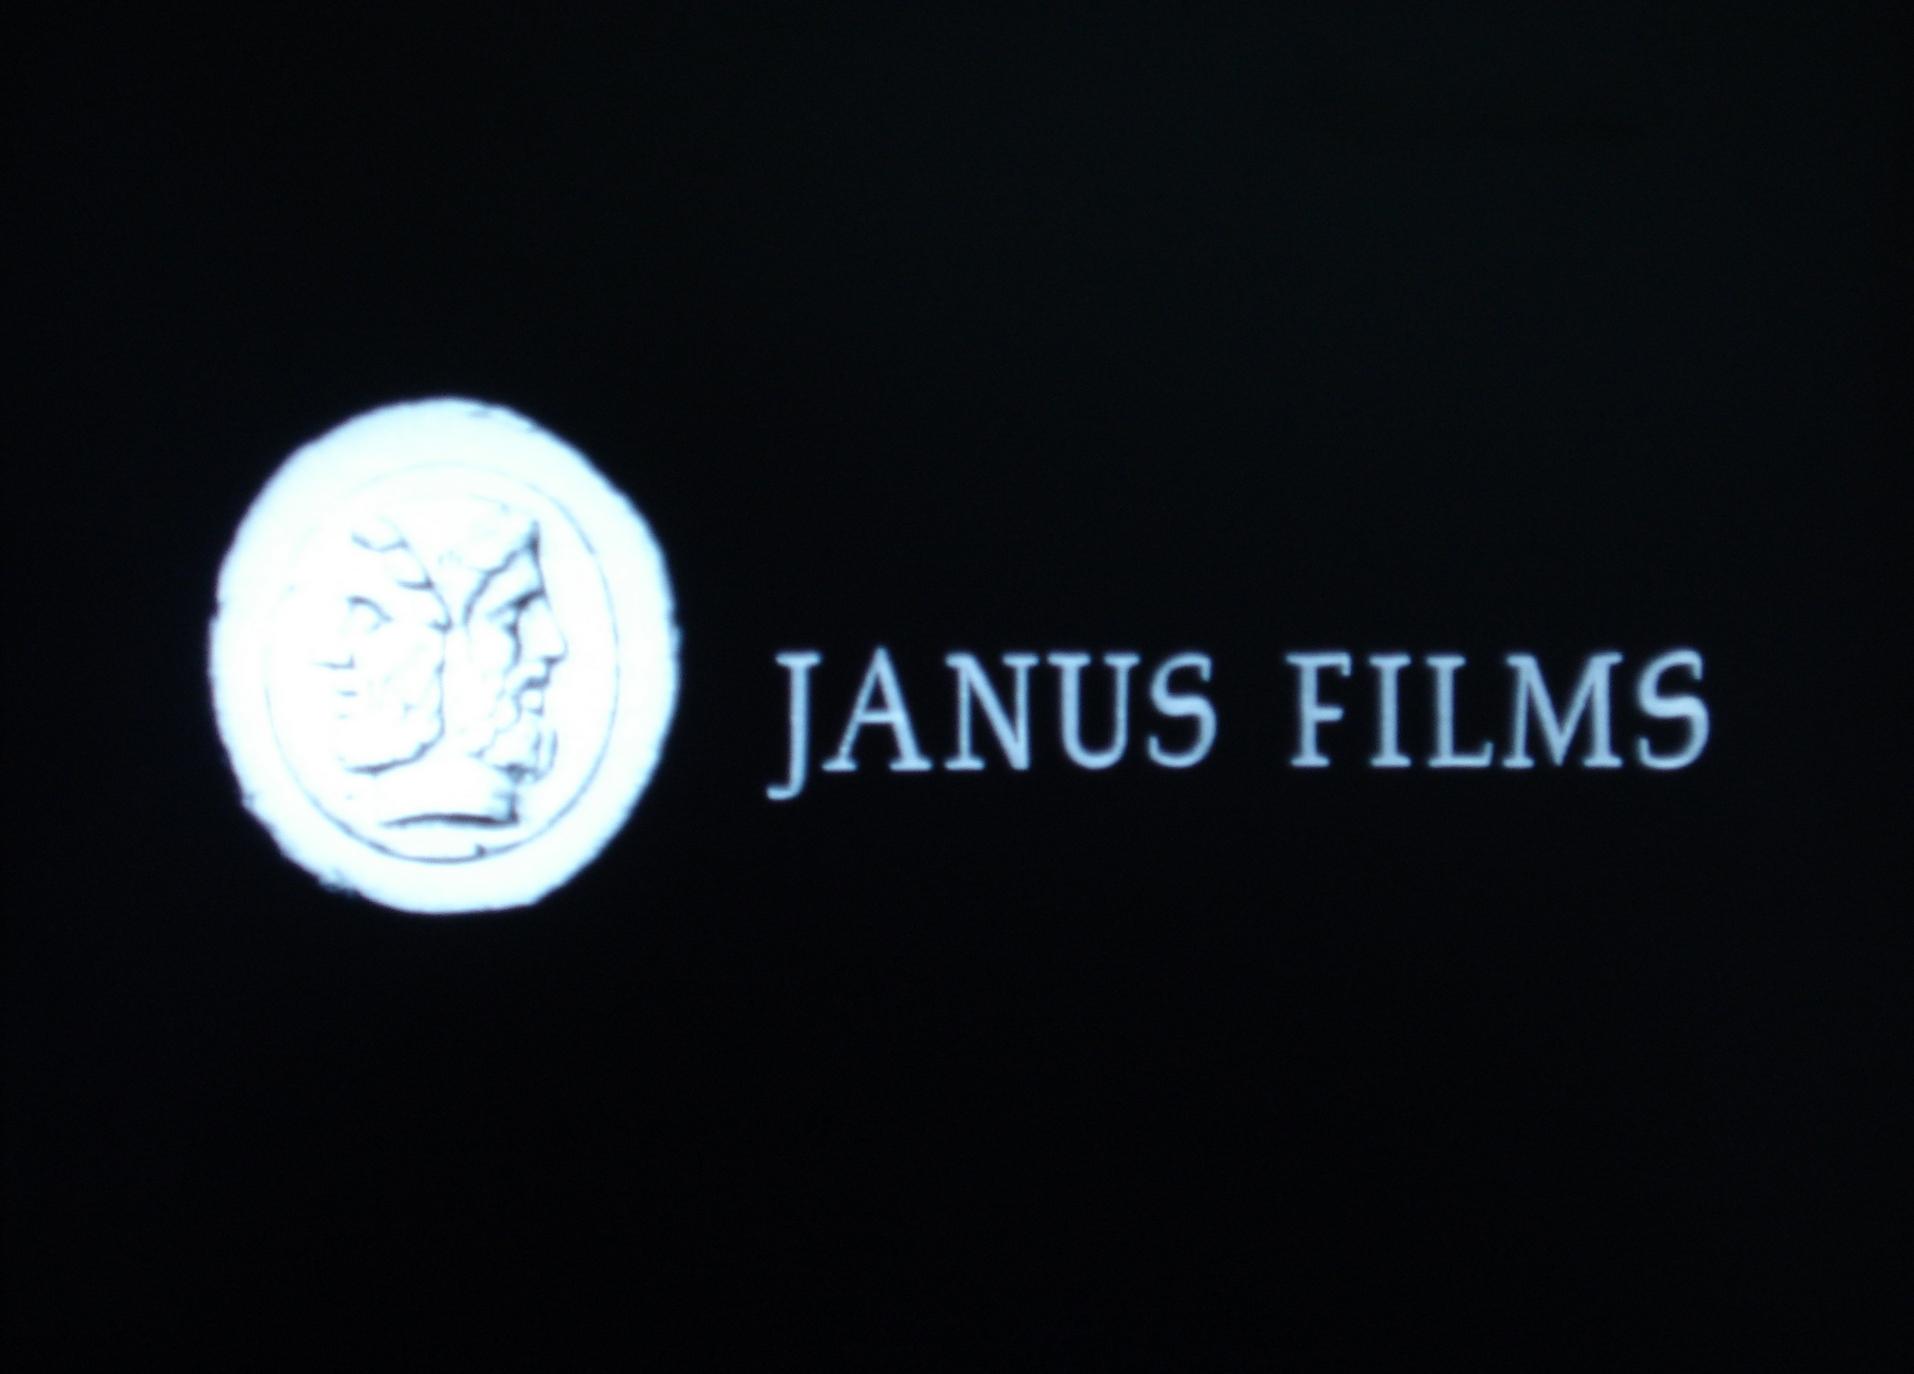 JANUS FILMS